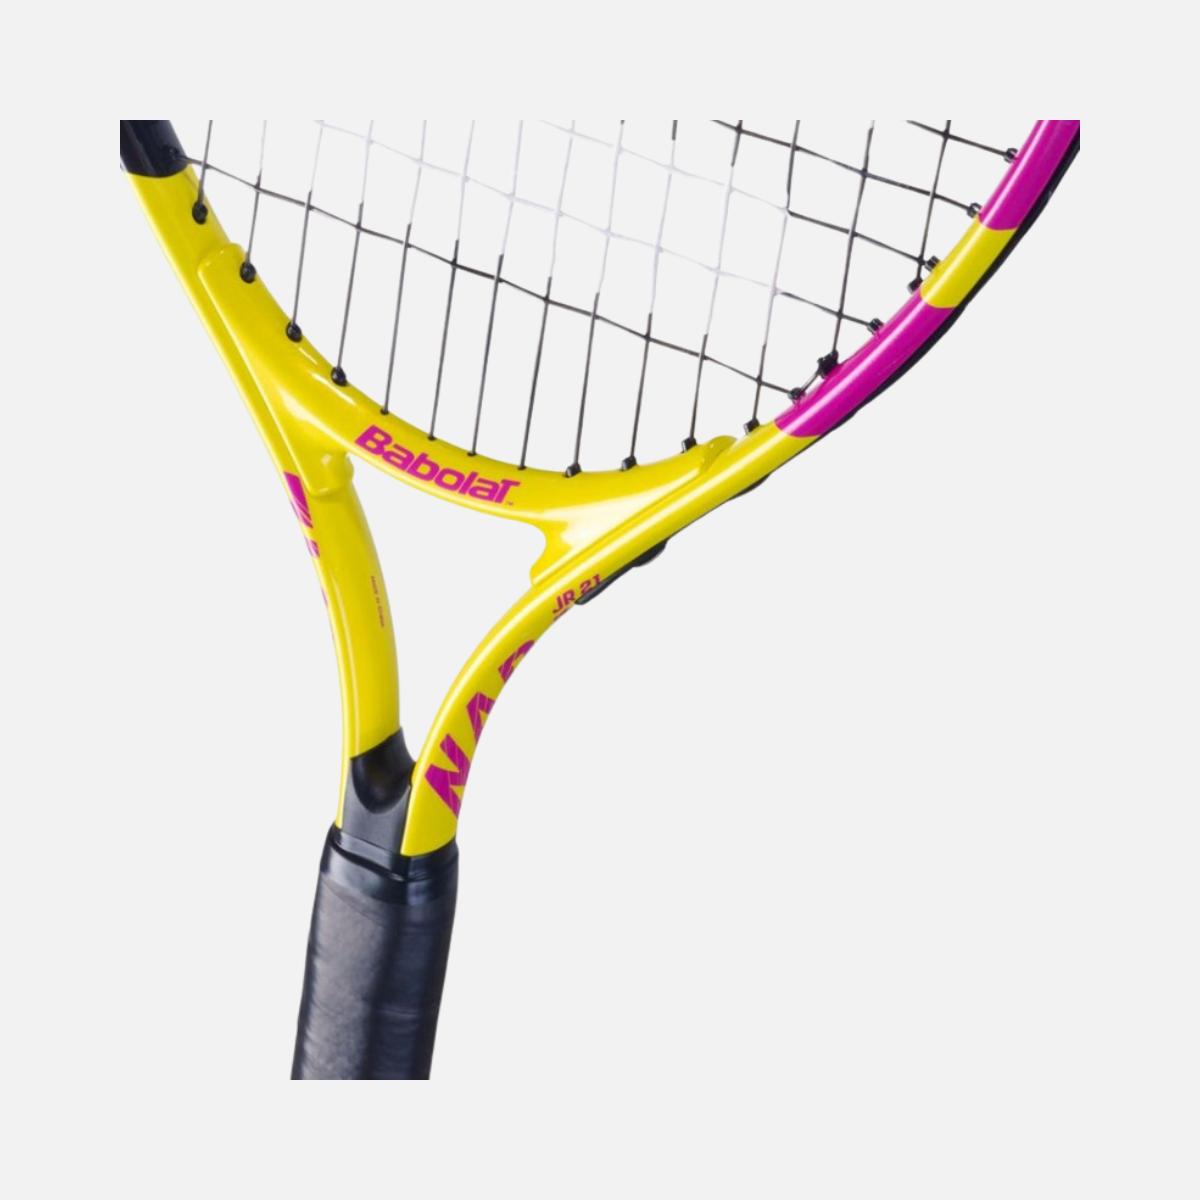 Babolat Nadal Junior 21 Tennis Racquet -Yellow/Orange